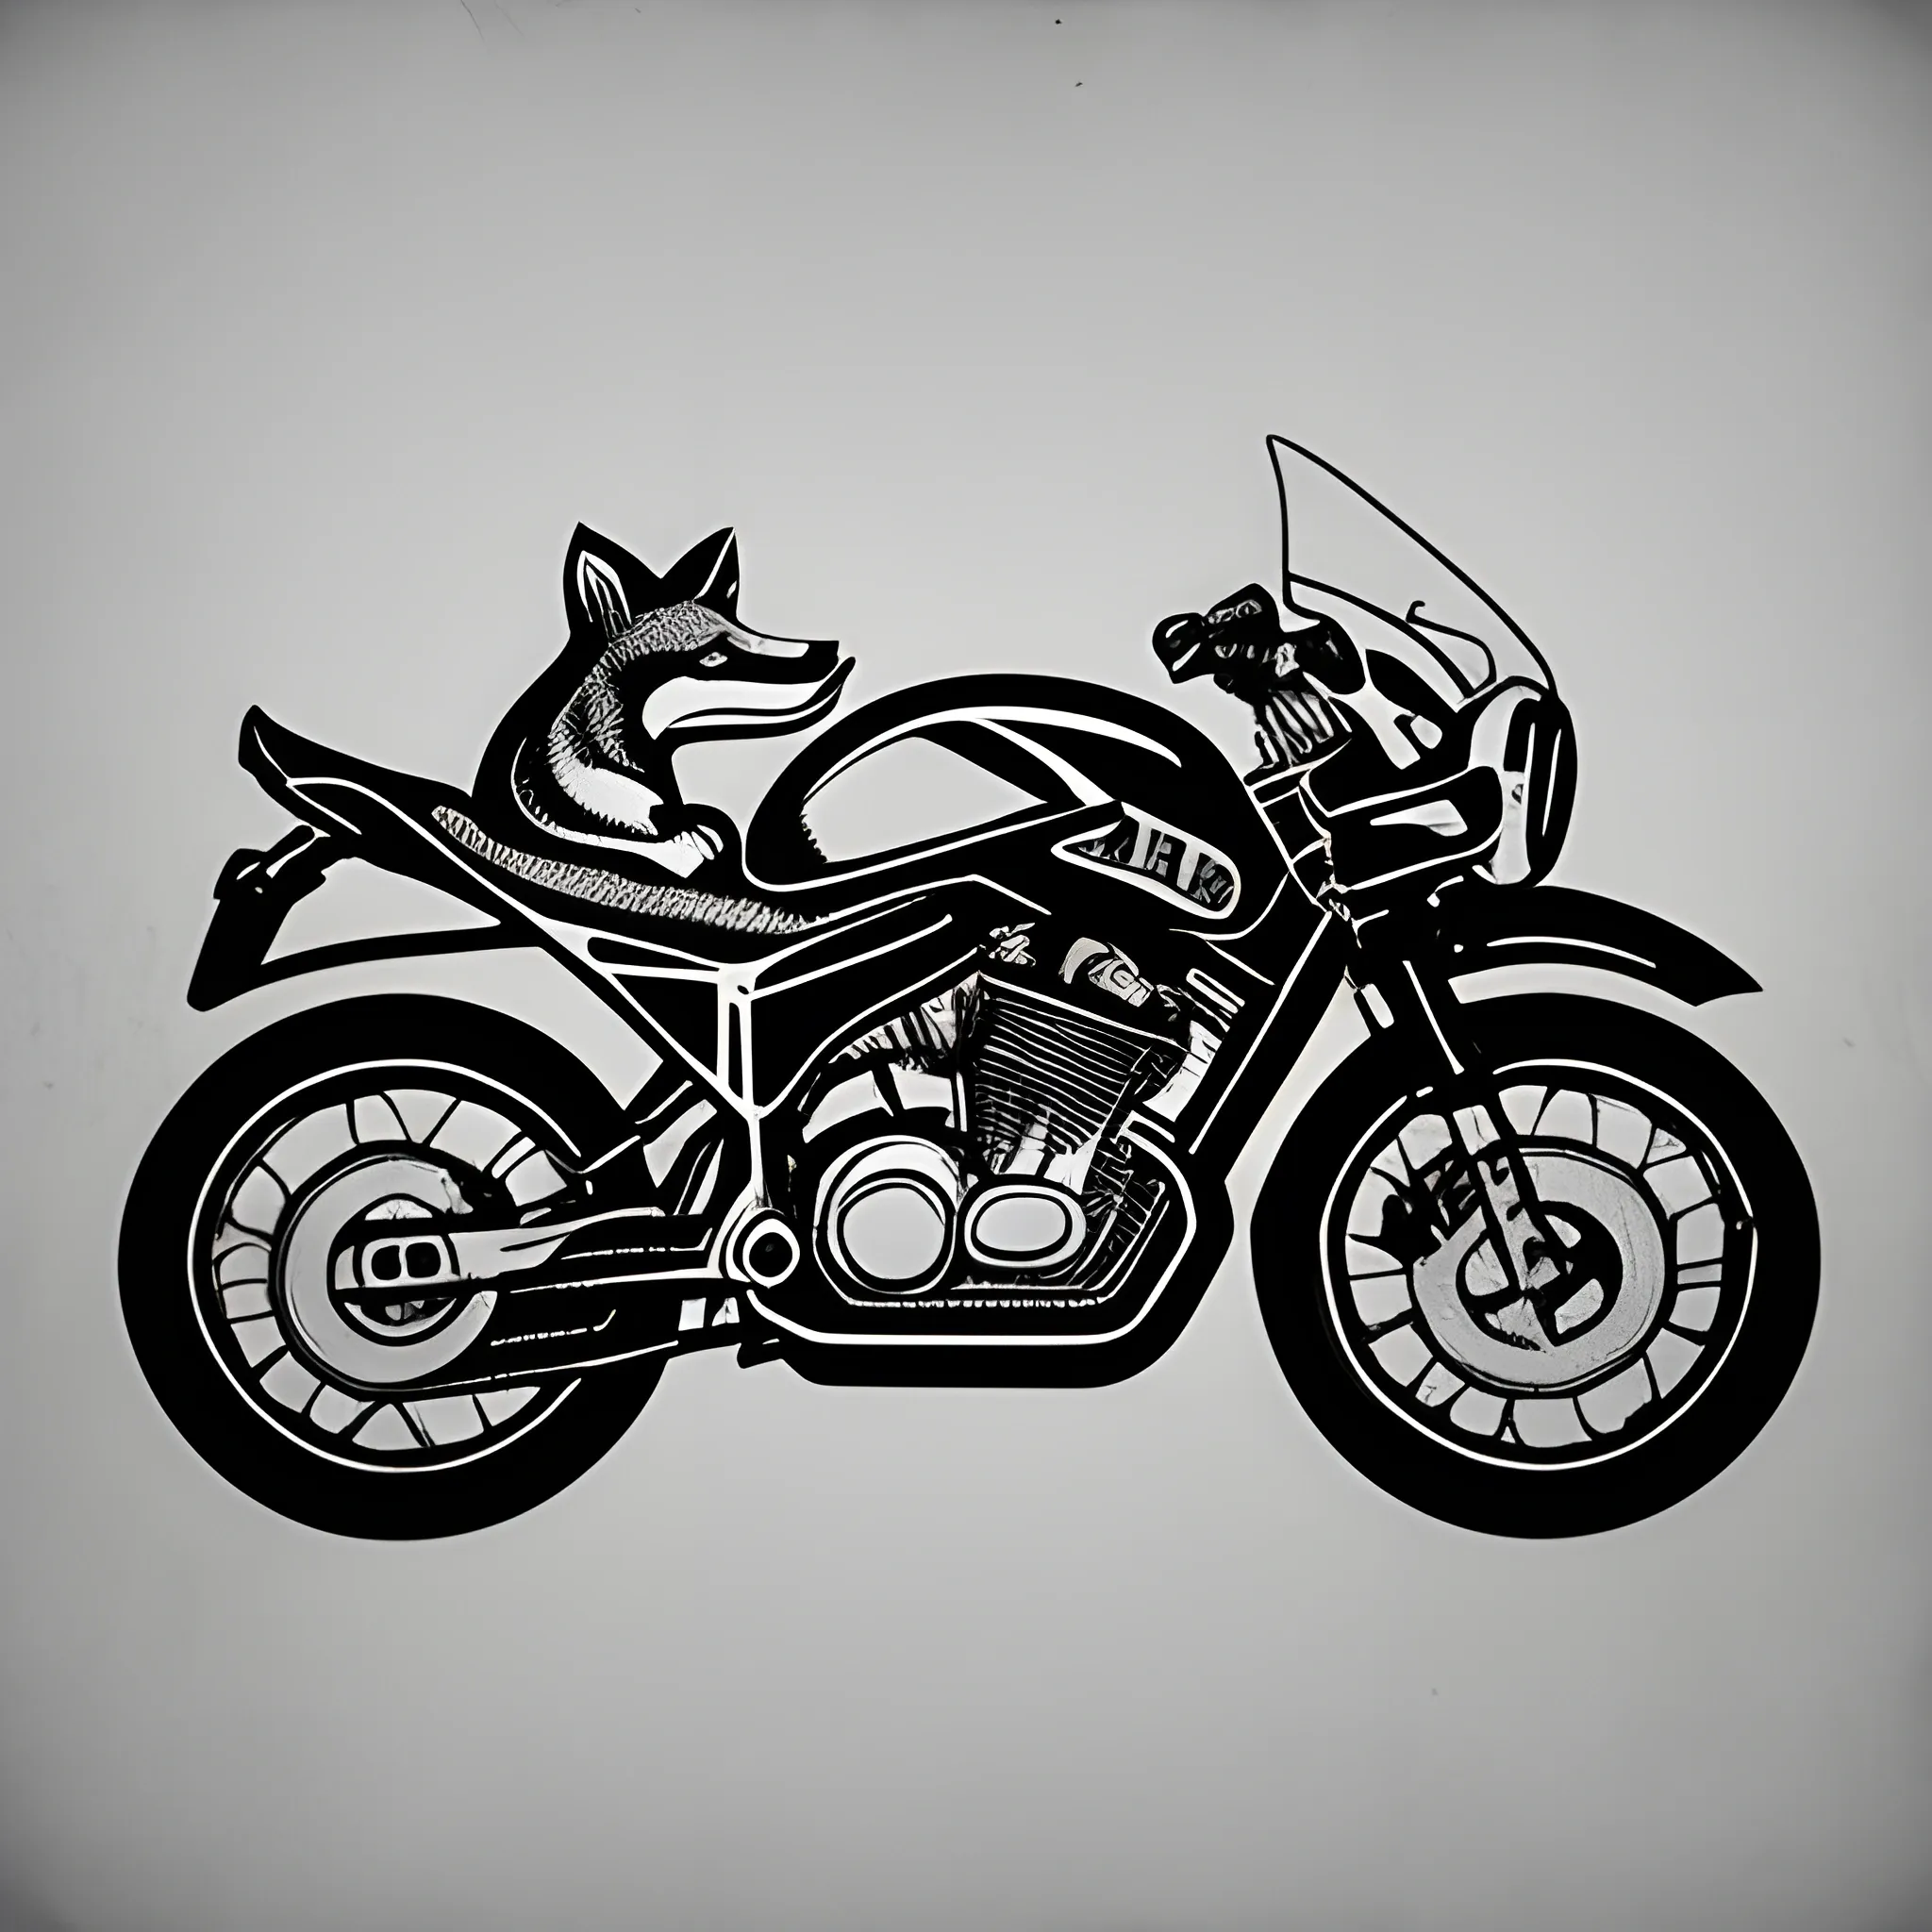 FOX IN MOTORCYCLE LOGO